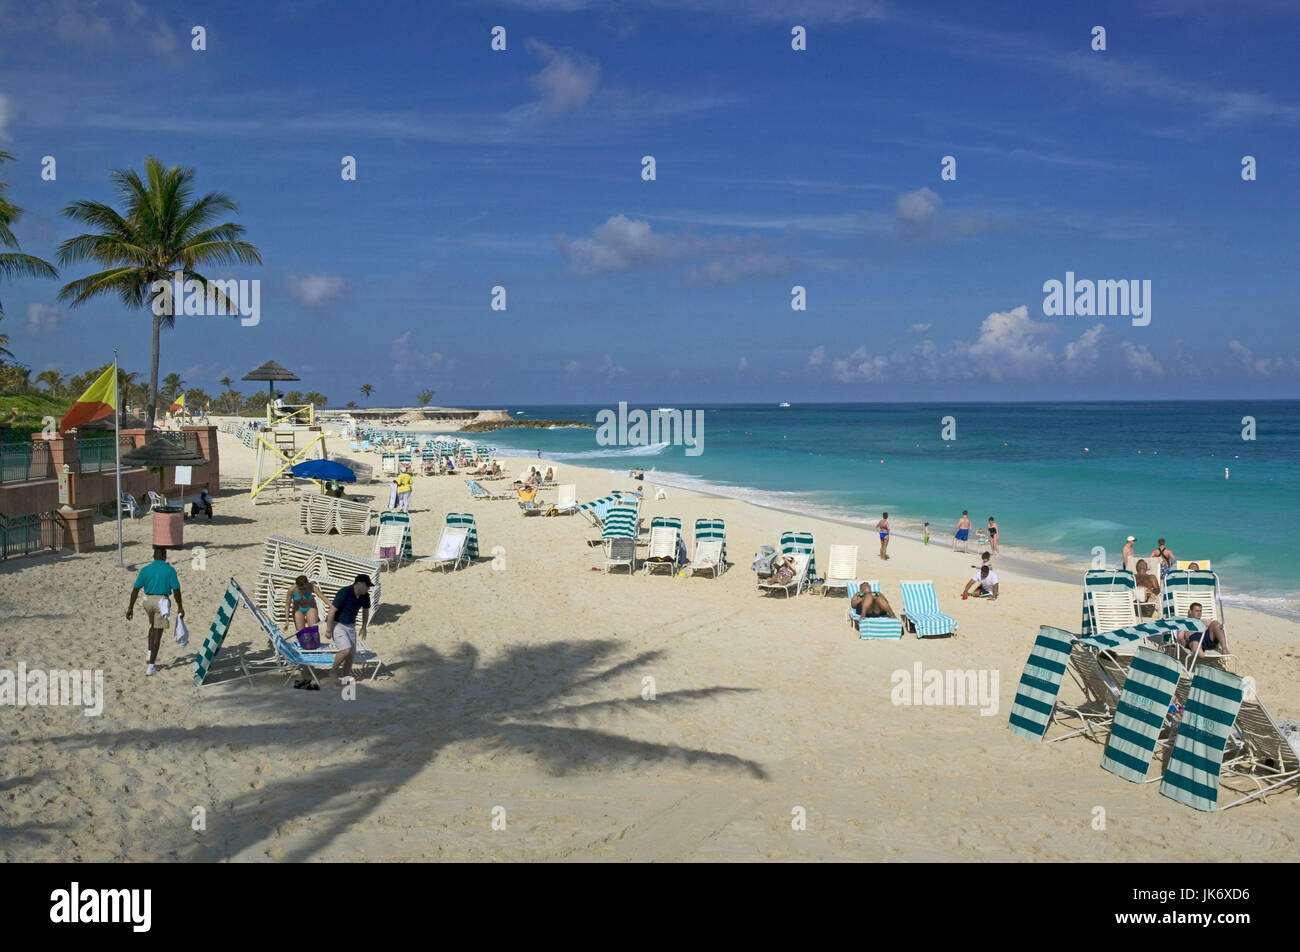 Bahamas, Nassau, Strand, Ozean, Urlaubsanlage, Atlantis Resort, Touristen, no model release Stock Photo